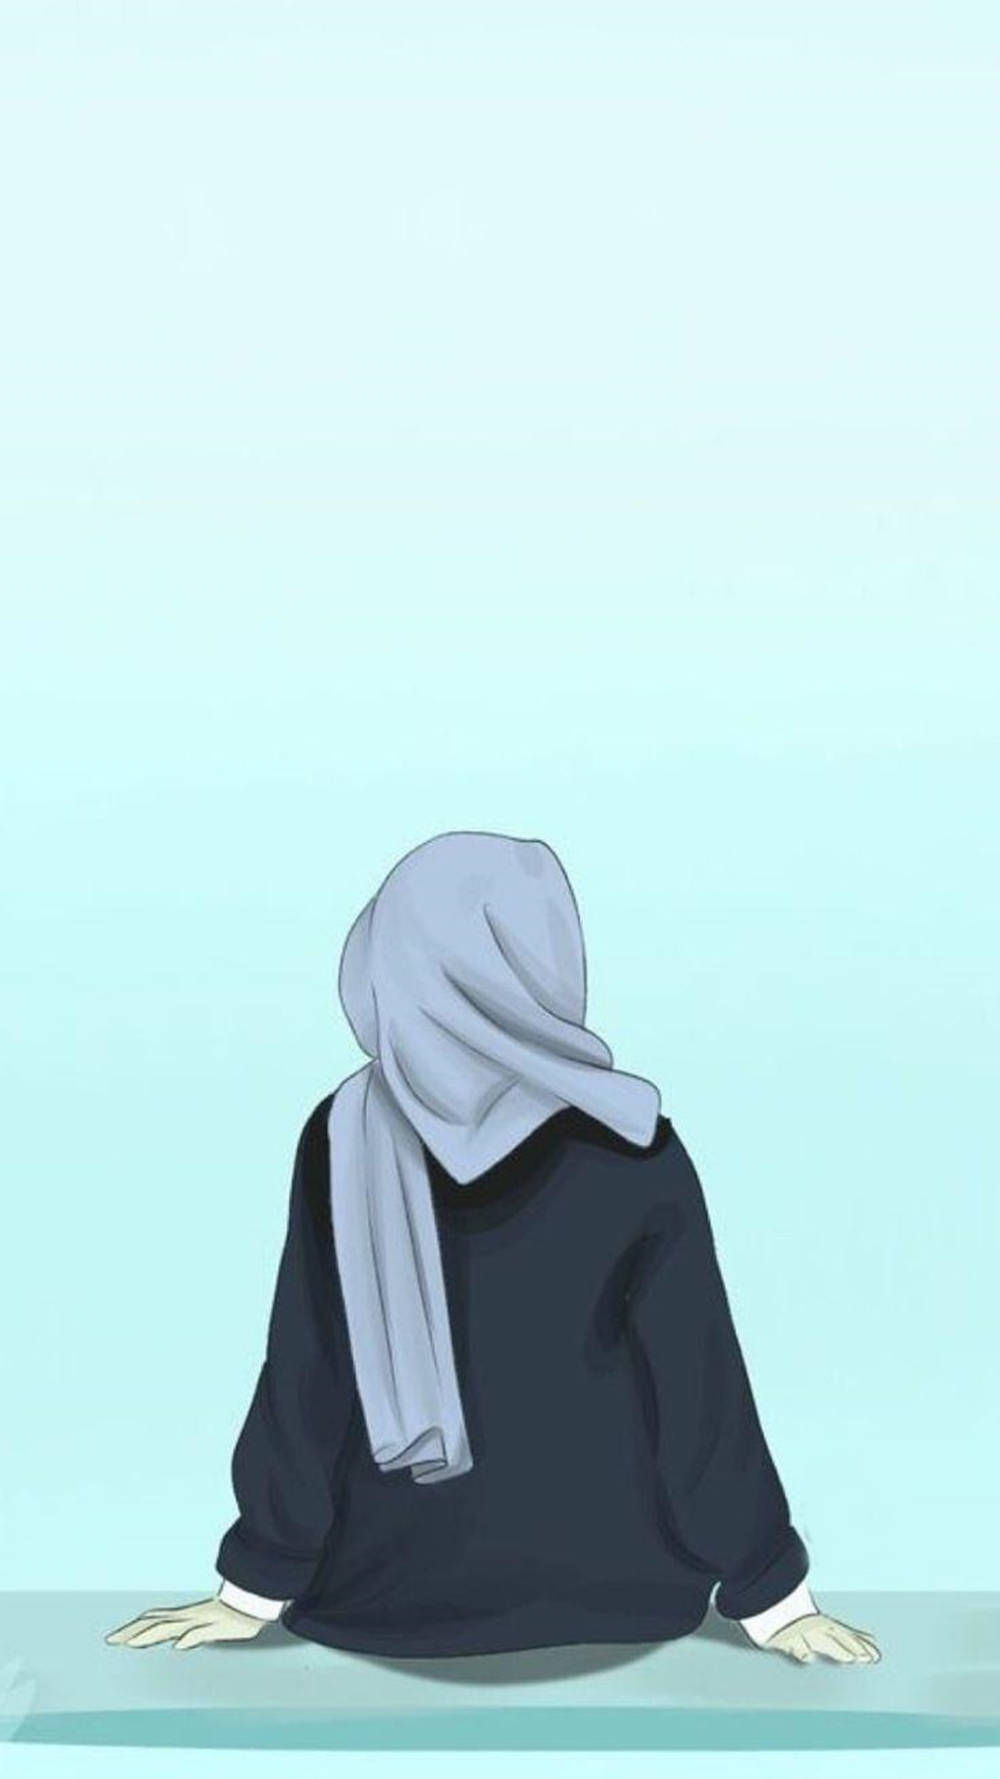 Hijab Girl Blue Digital Illustration Wallpaper